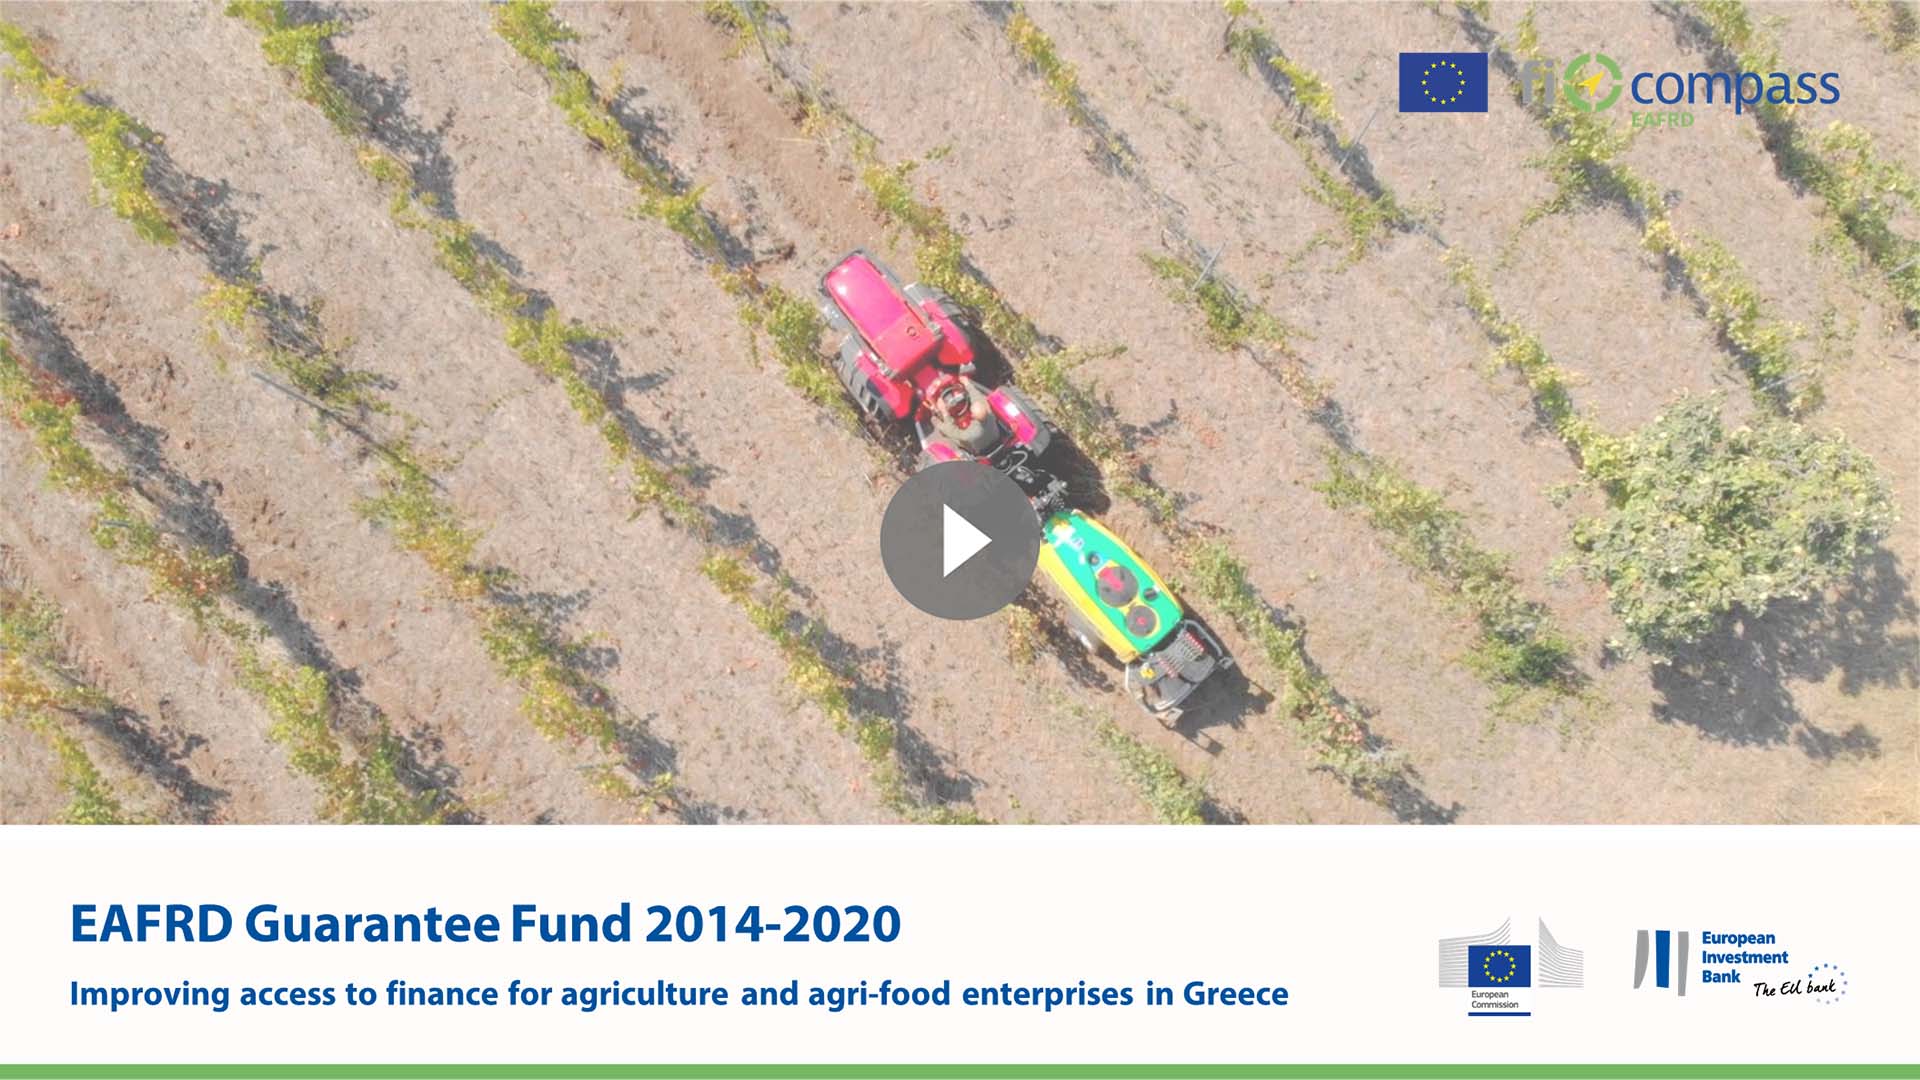 The Greek EAFRD Guarantee Fund 2014-2020